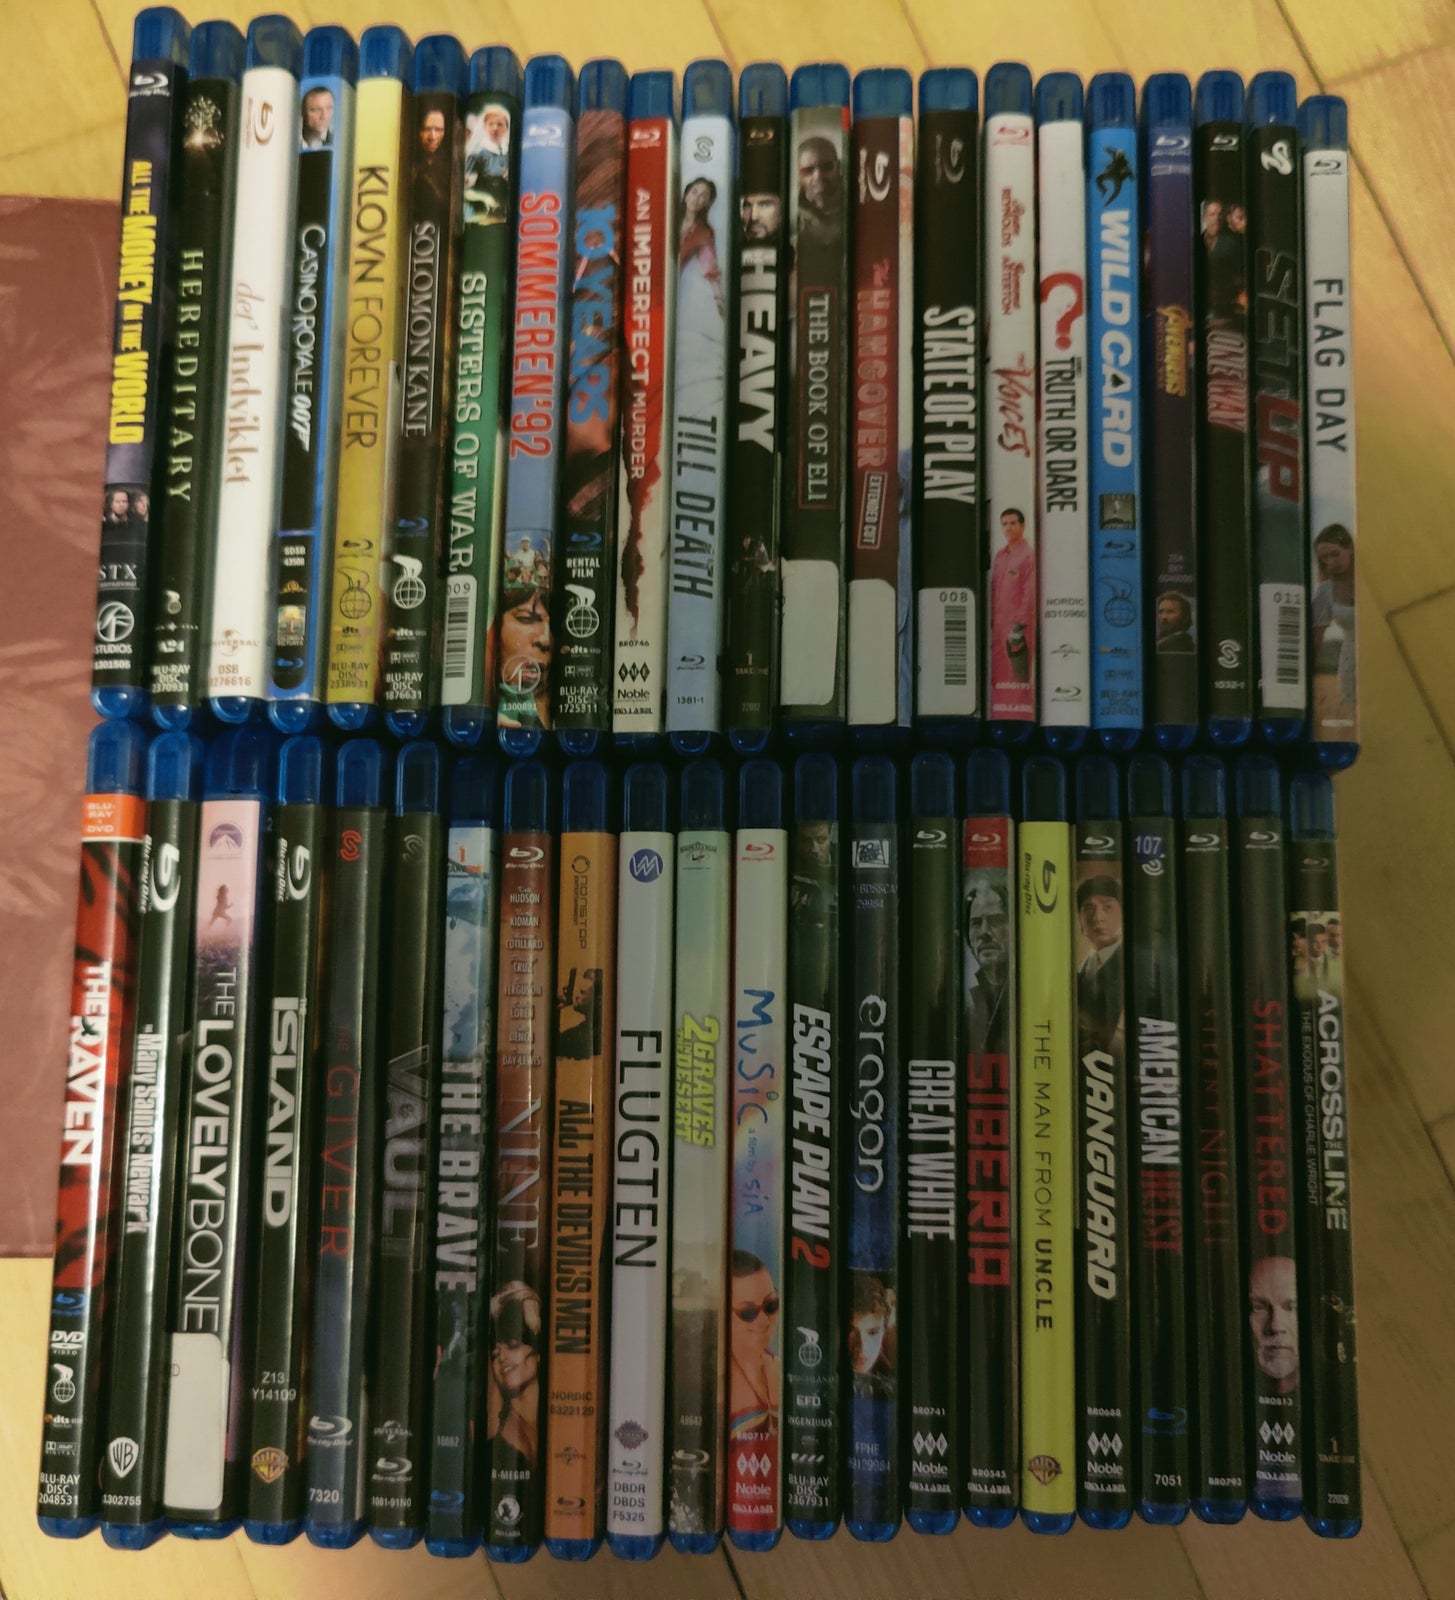 44 forskellige film, Blu-ray, andet